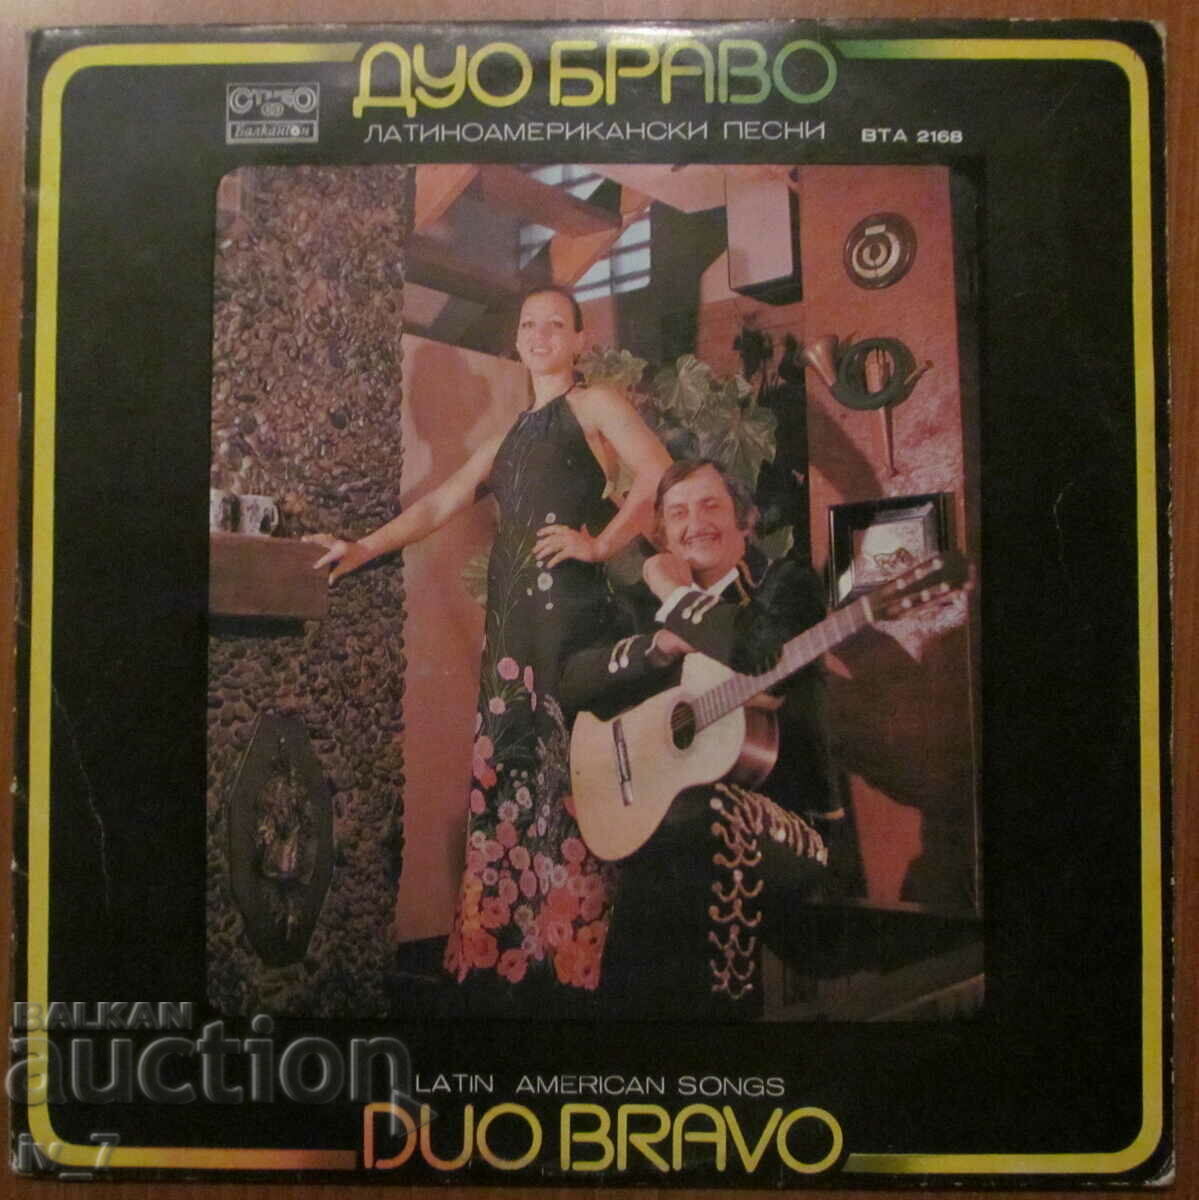 RECORD - DUO BRAVO, μεγάλο σχήμα